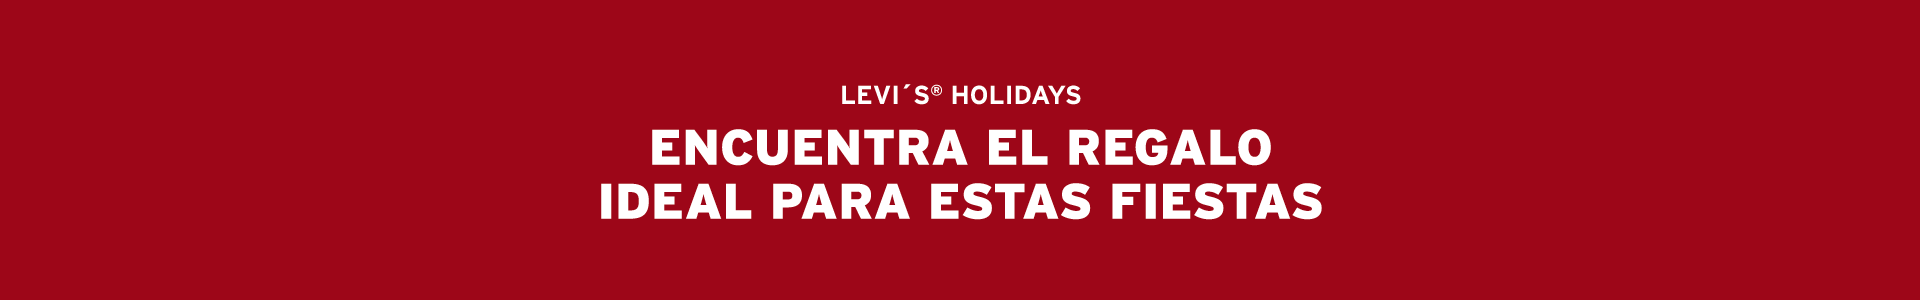 Levi's holidays